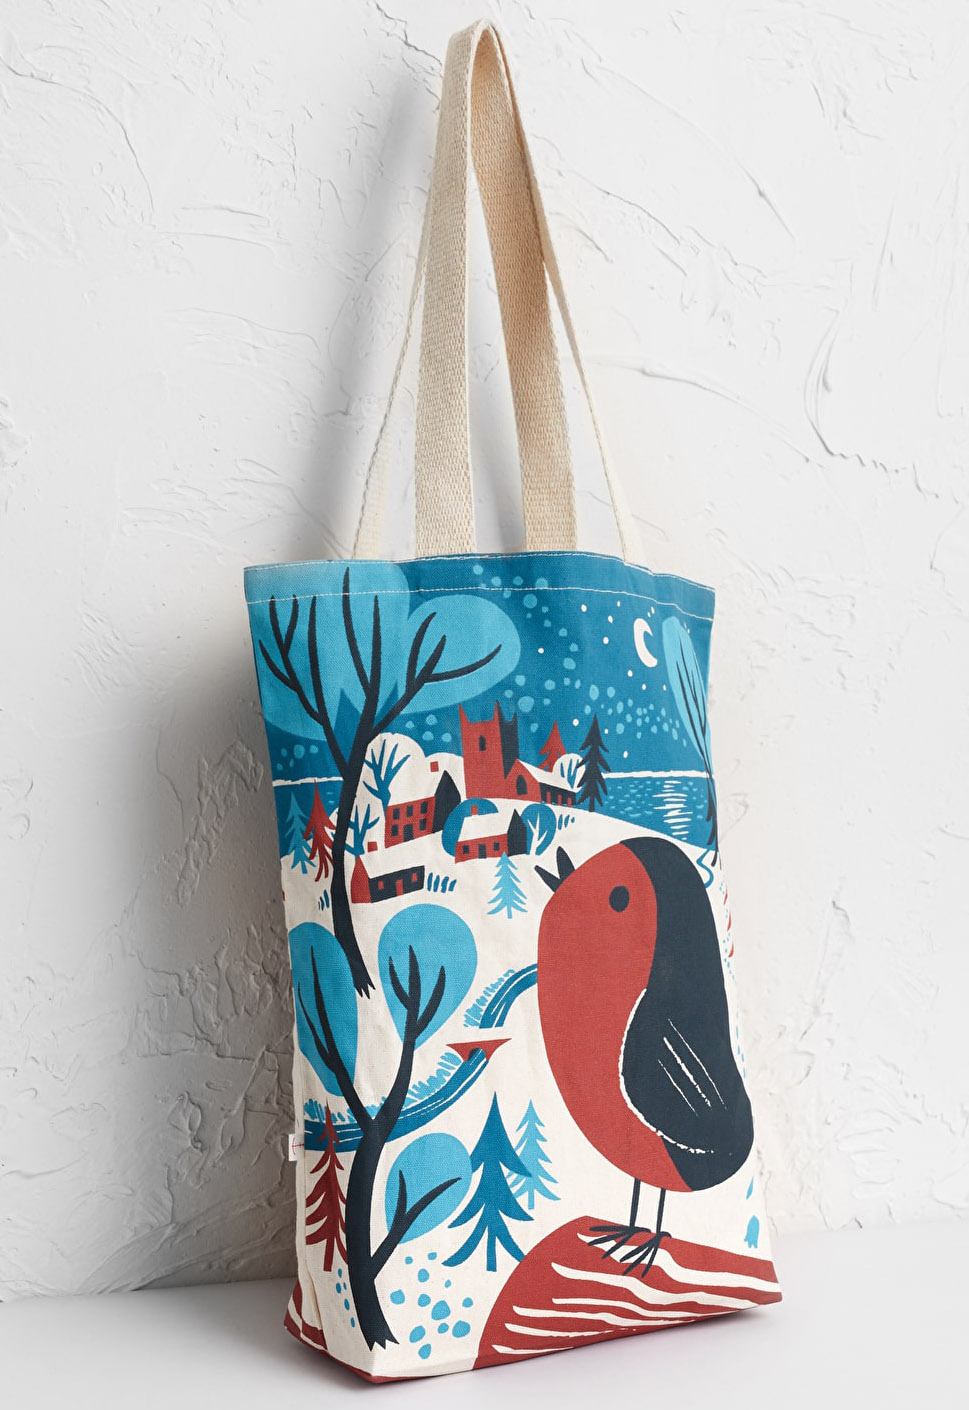 Christmas robin canvas bag design by Matt Johnson for Seasalt Cornwall